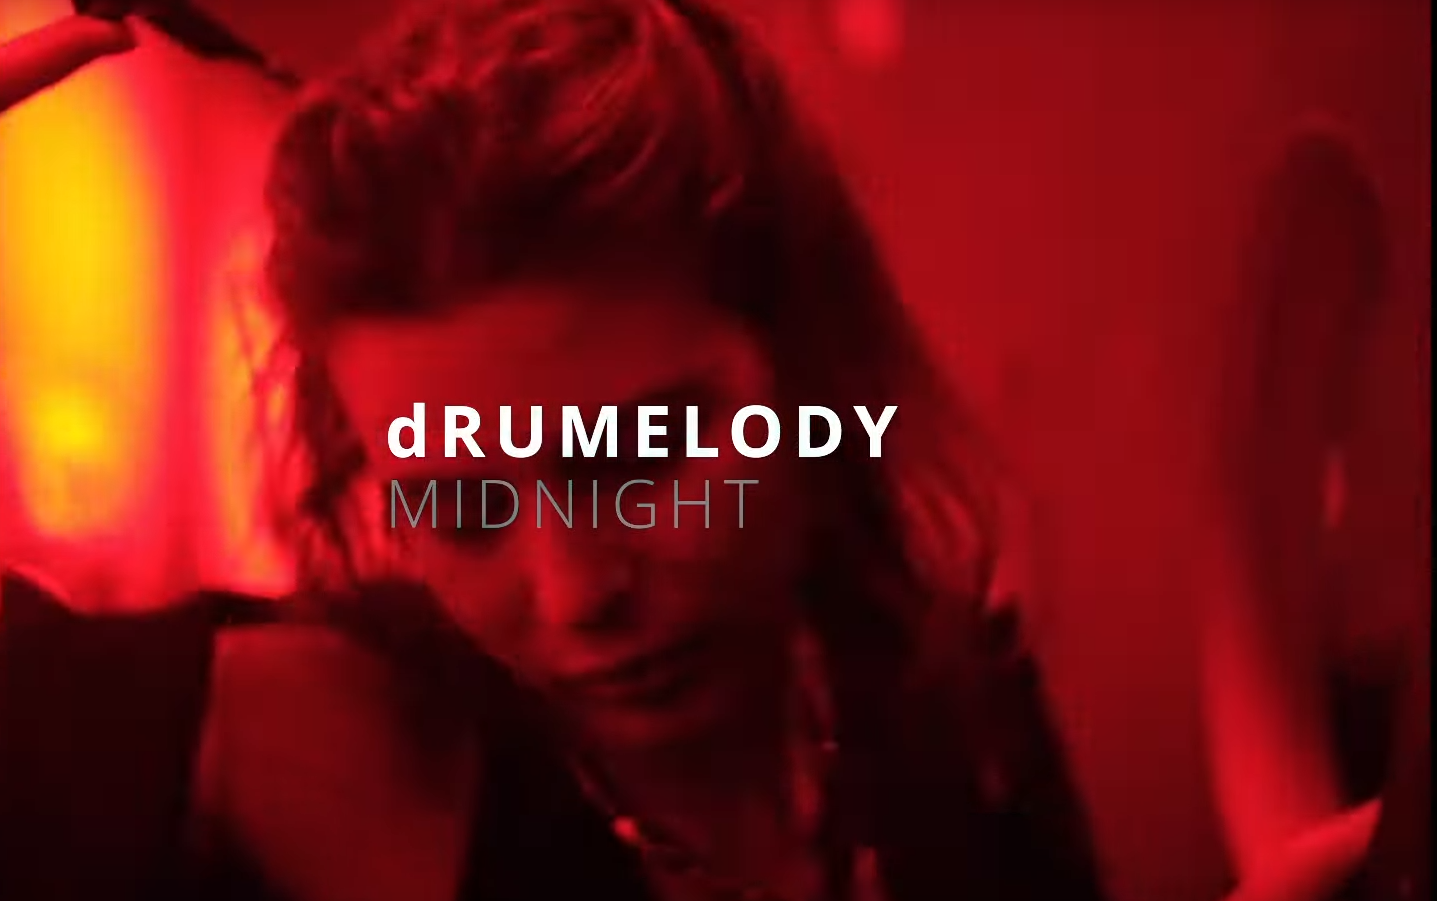 Drumelody predstavio spot za pjesmu "Midnight"